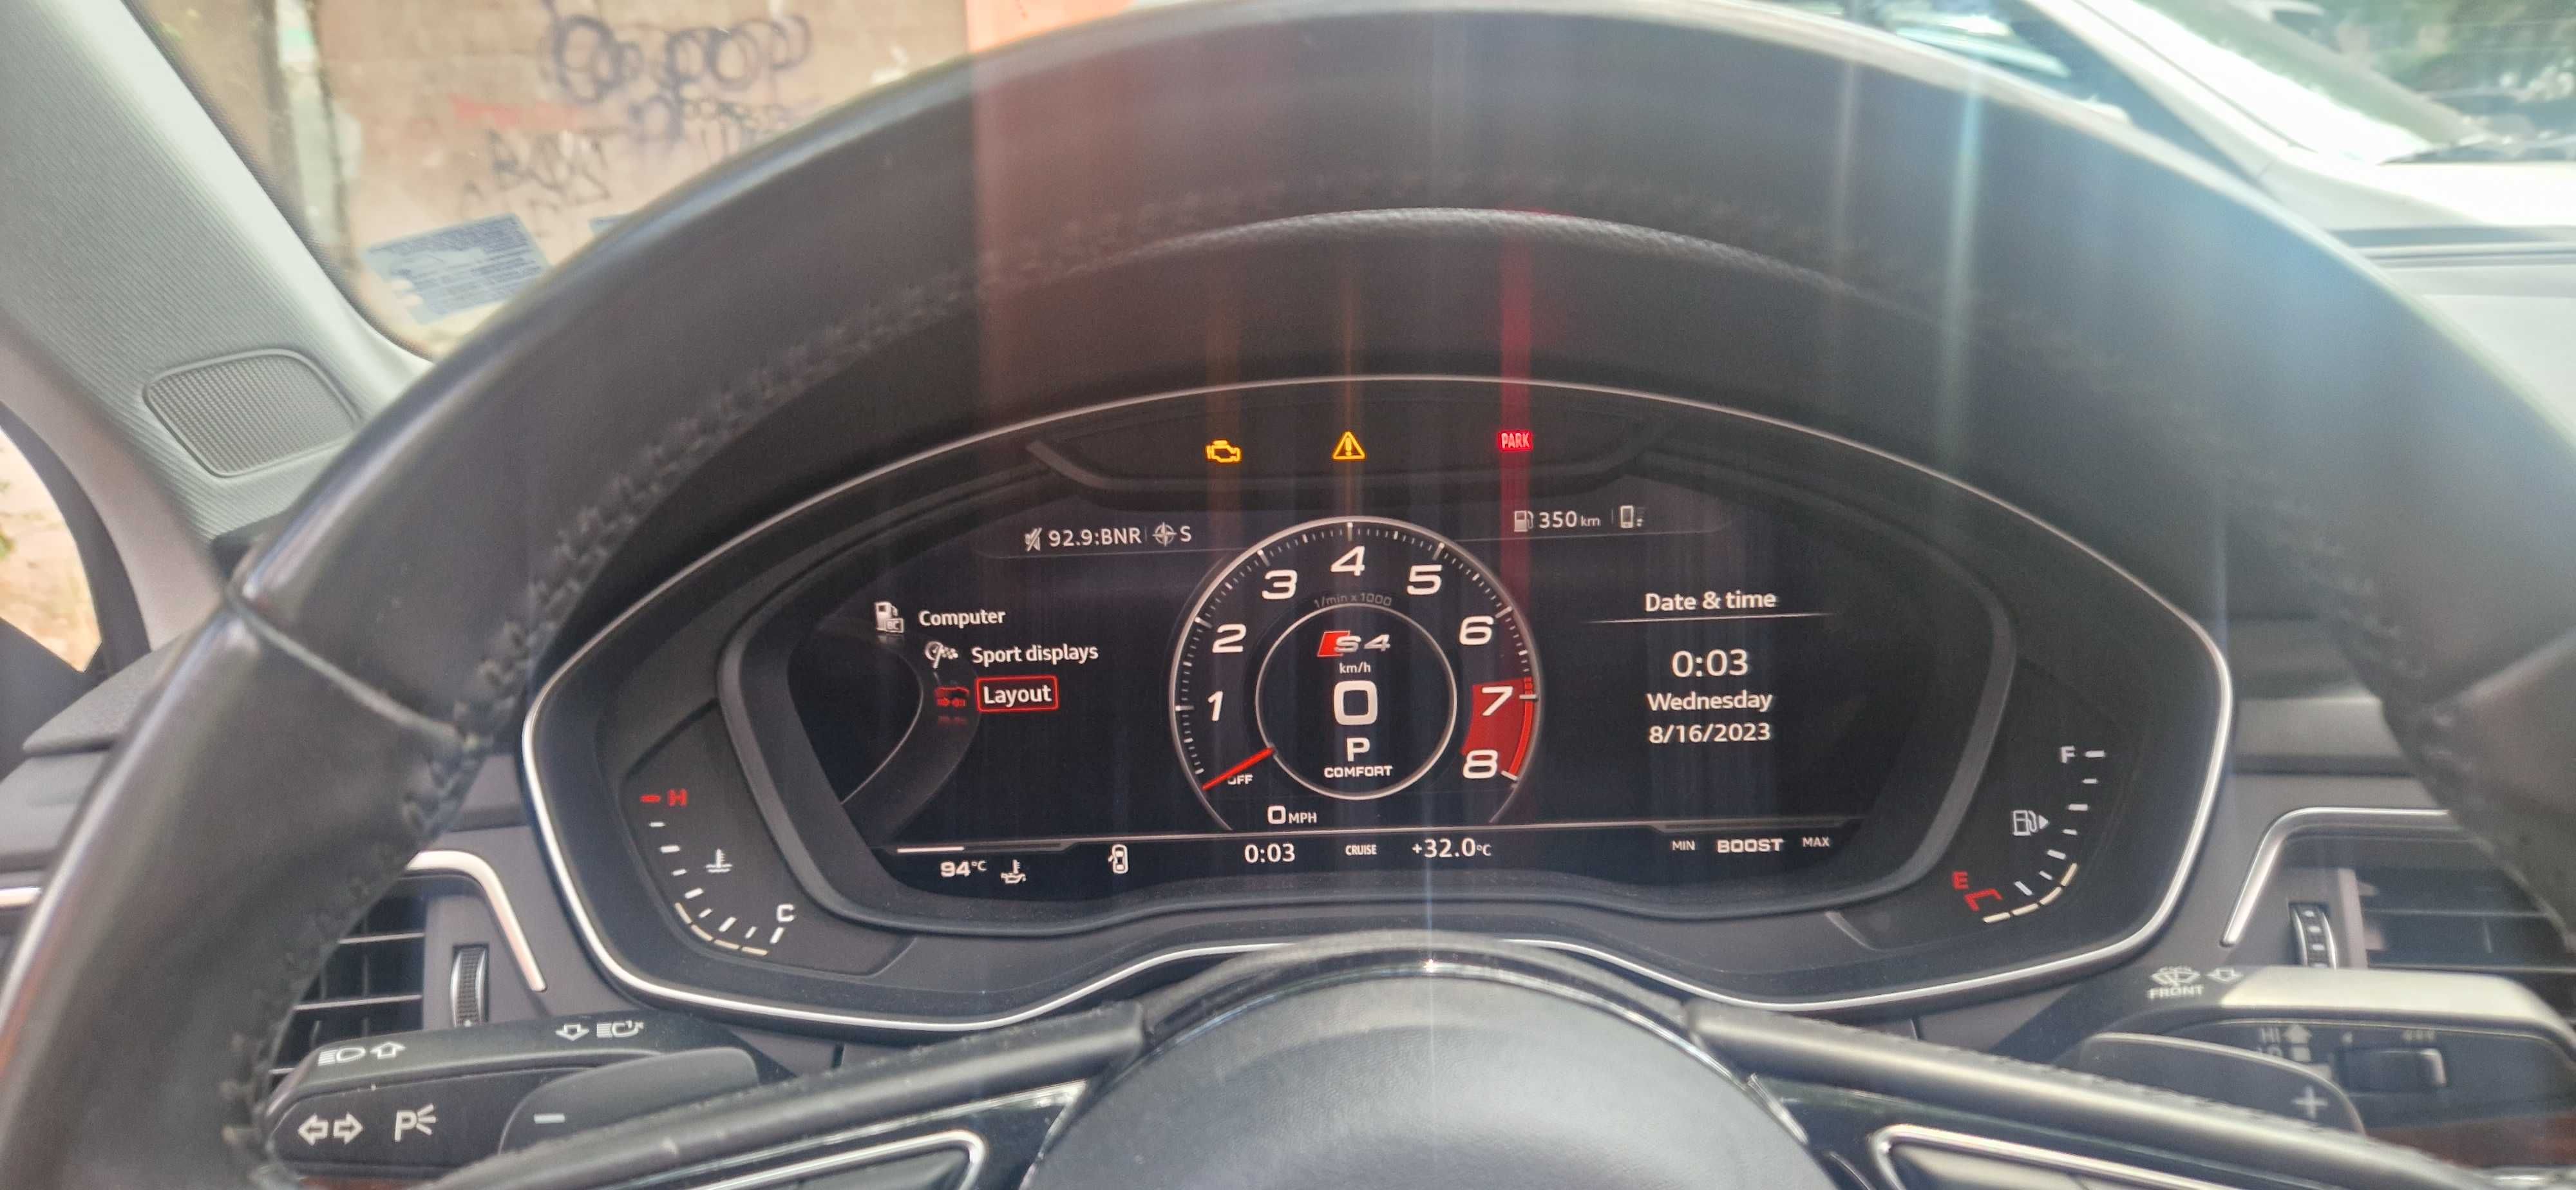 Audi Sport Cockpit layout Визия Audi A3 /A4 /A5 /A6 /A7 /A8 Q5 /Q7 /Q8